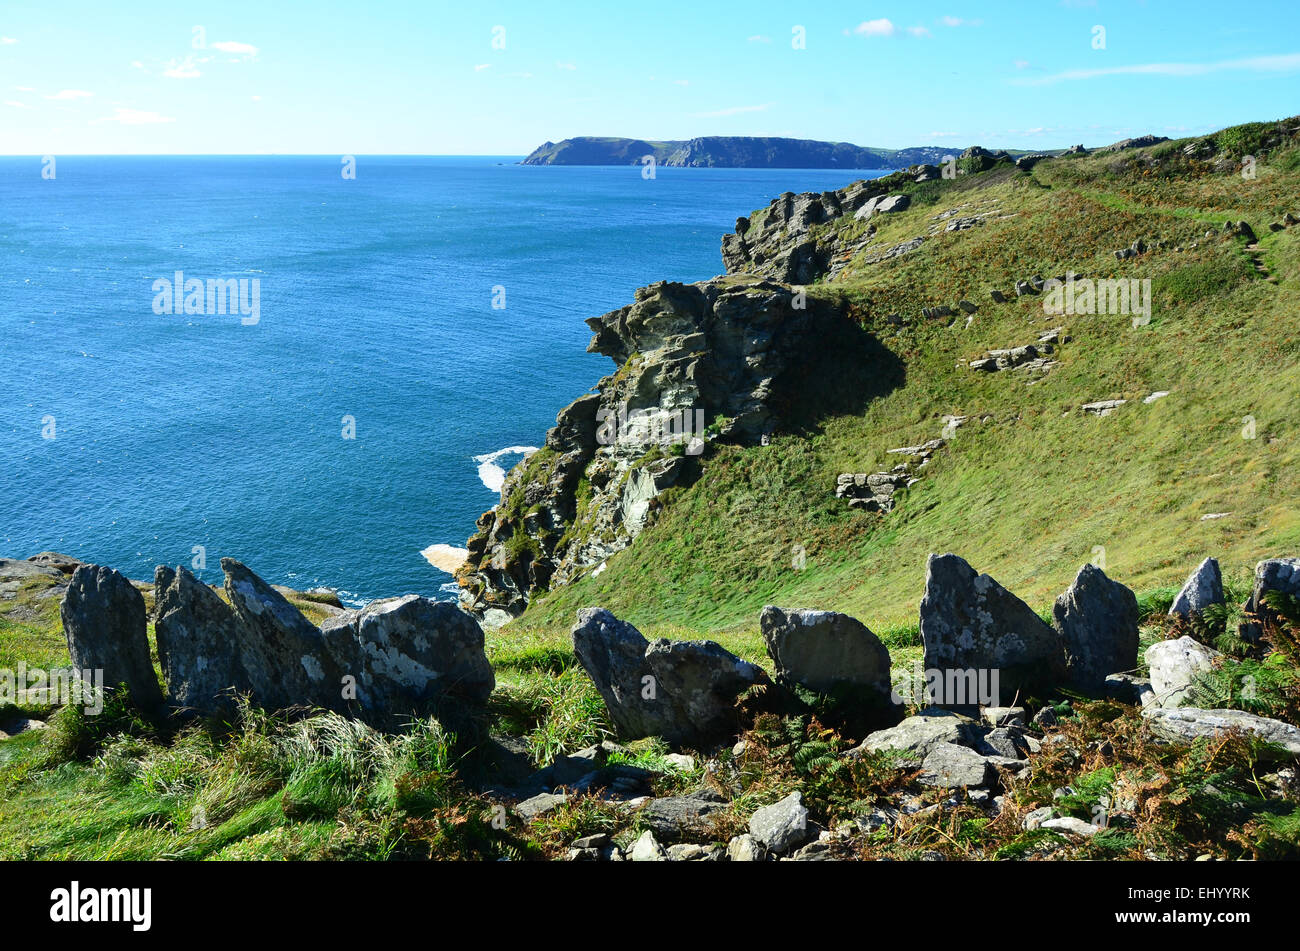 England, Devon, prawle point, rocks, cliffs, salcombe, cliffs, sea, Great Britain, Europe, coast Stock Photo